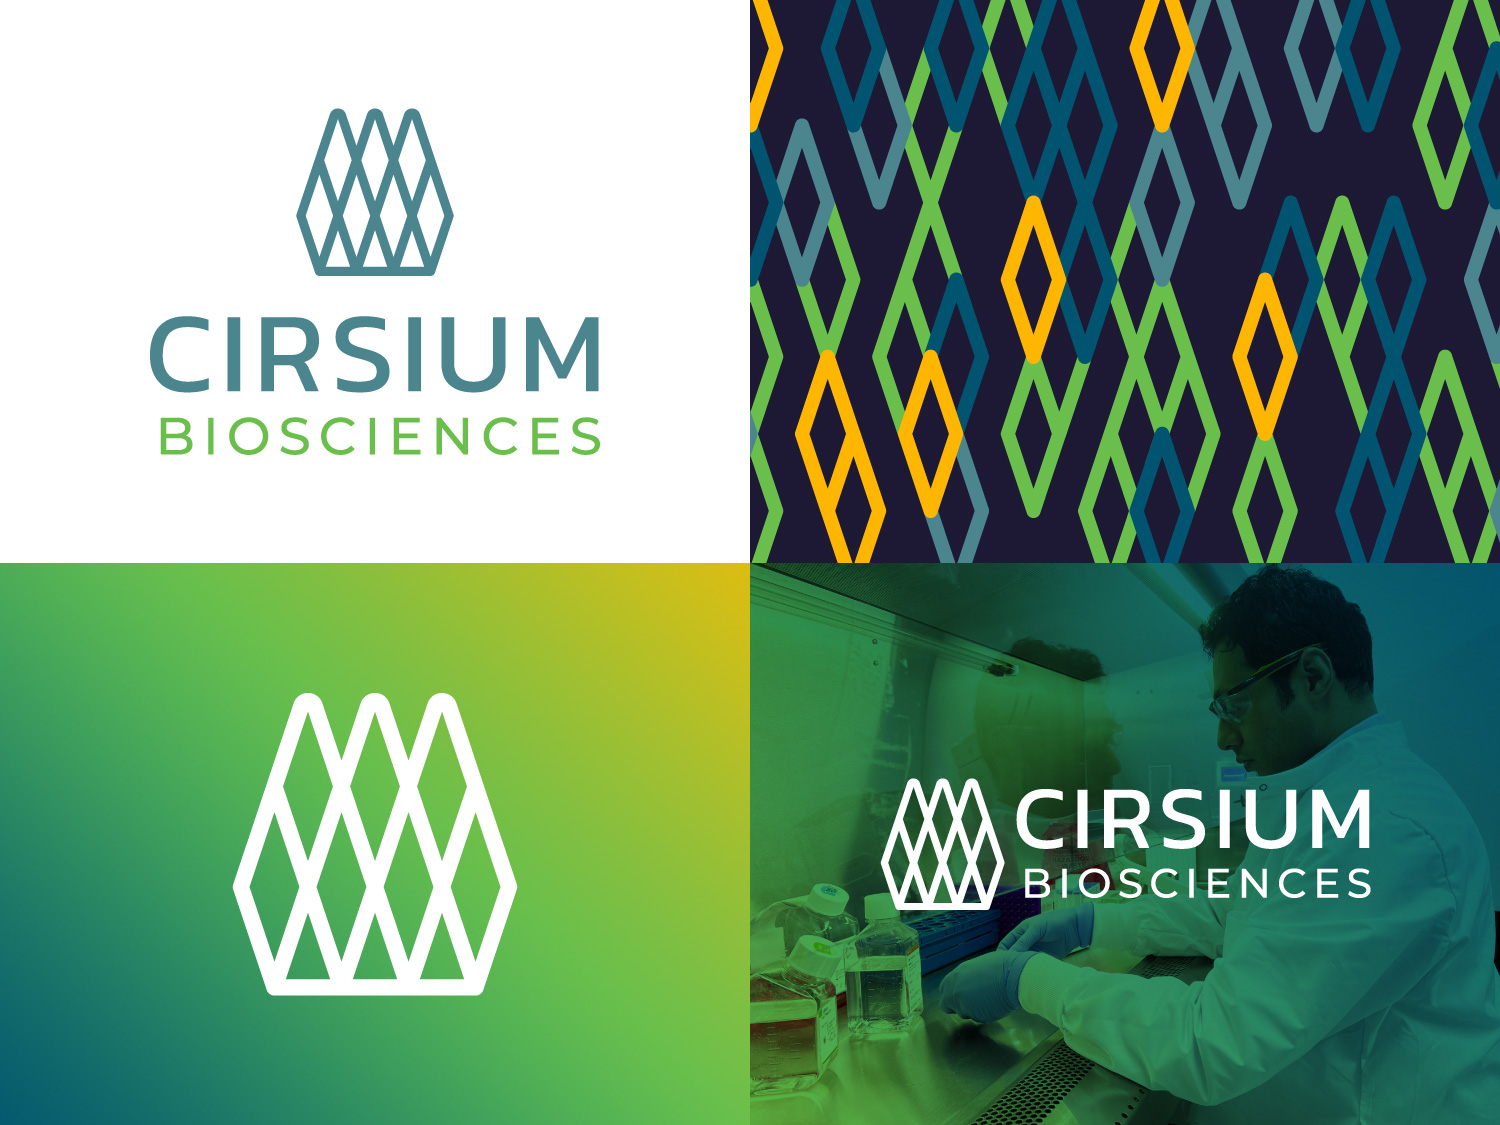 Cirsium Biosciences Brand identity in logo